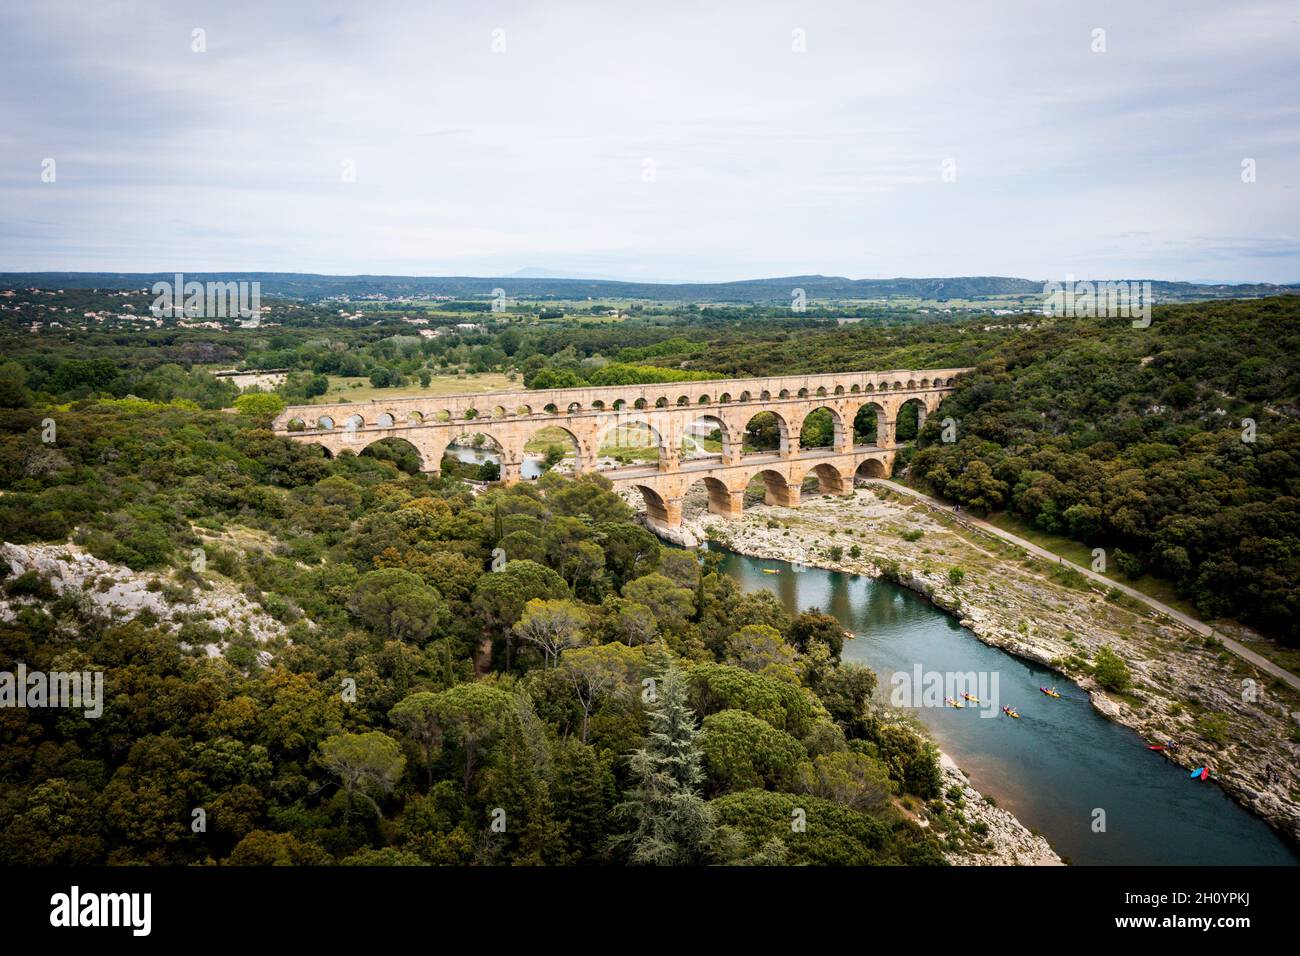 Roman aqueduct, Pont-du-Gard, Languedoc-Roussillon France, Aerial view Stock Photo